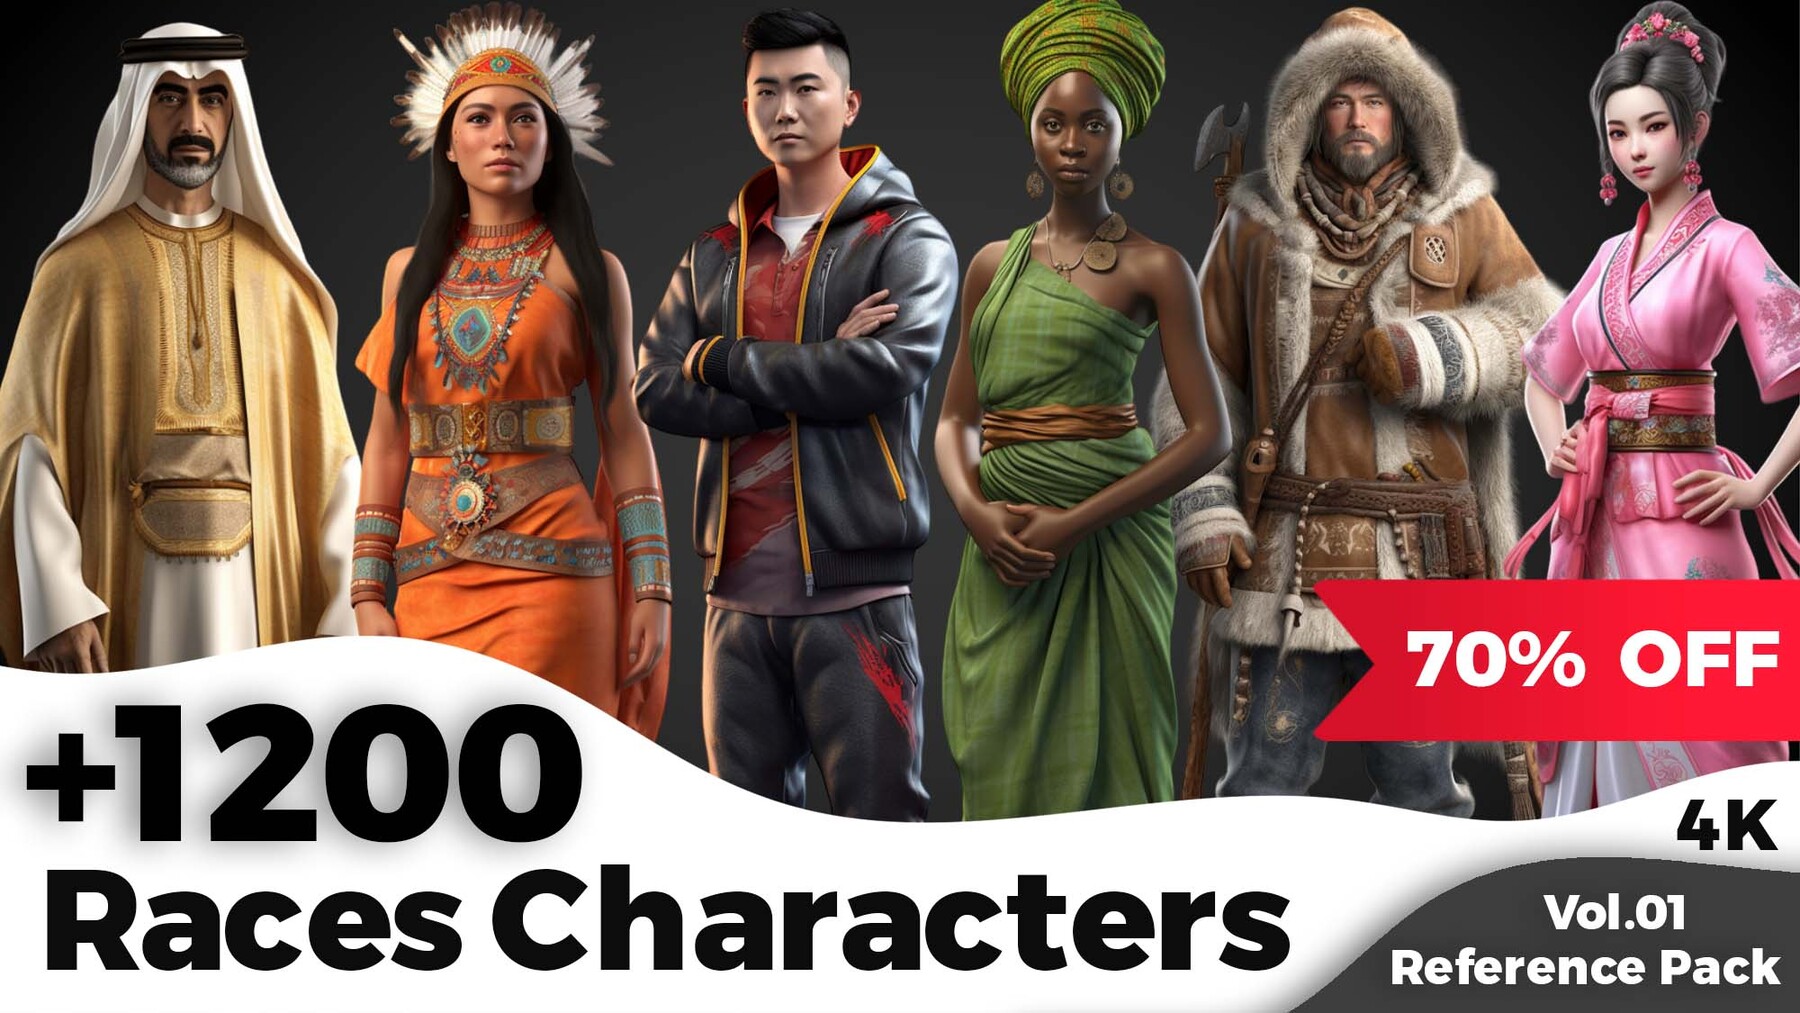 ArtStation - +1200 Races Characters Concept (4K) | 70% OFF | Artworks